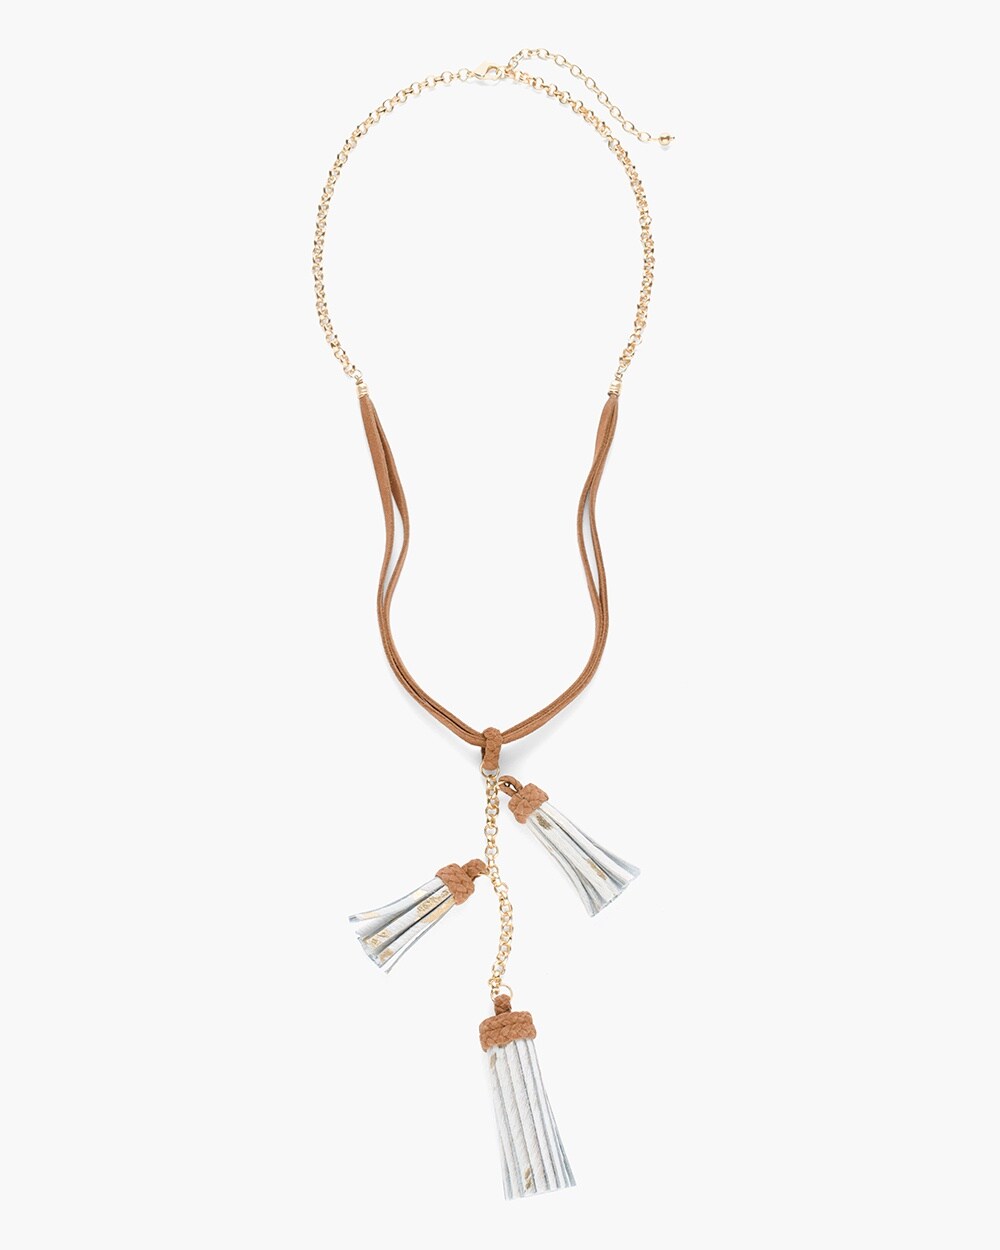 Sydney Tassel Necklace